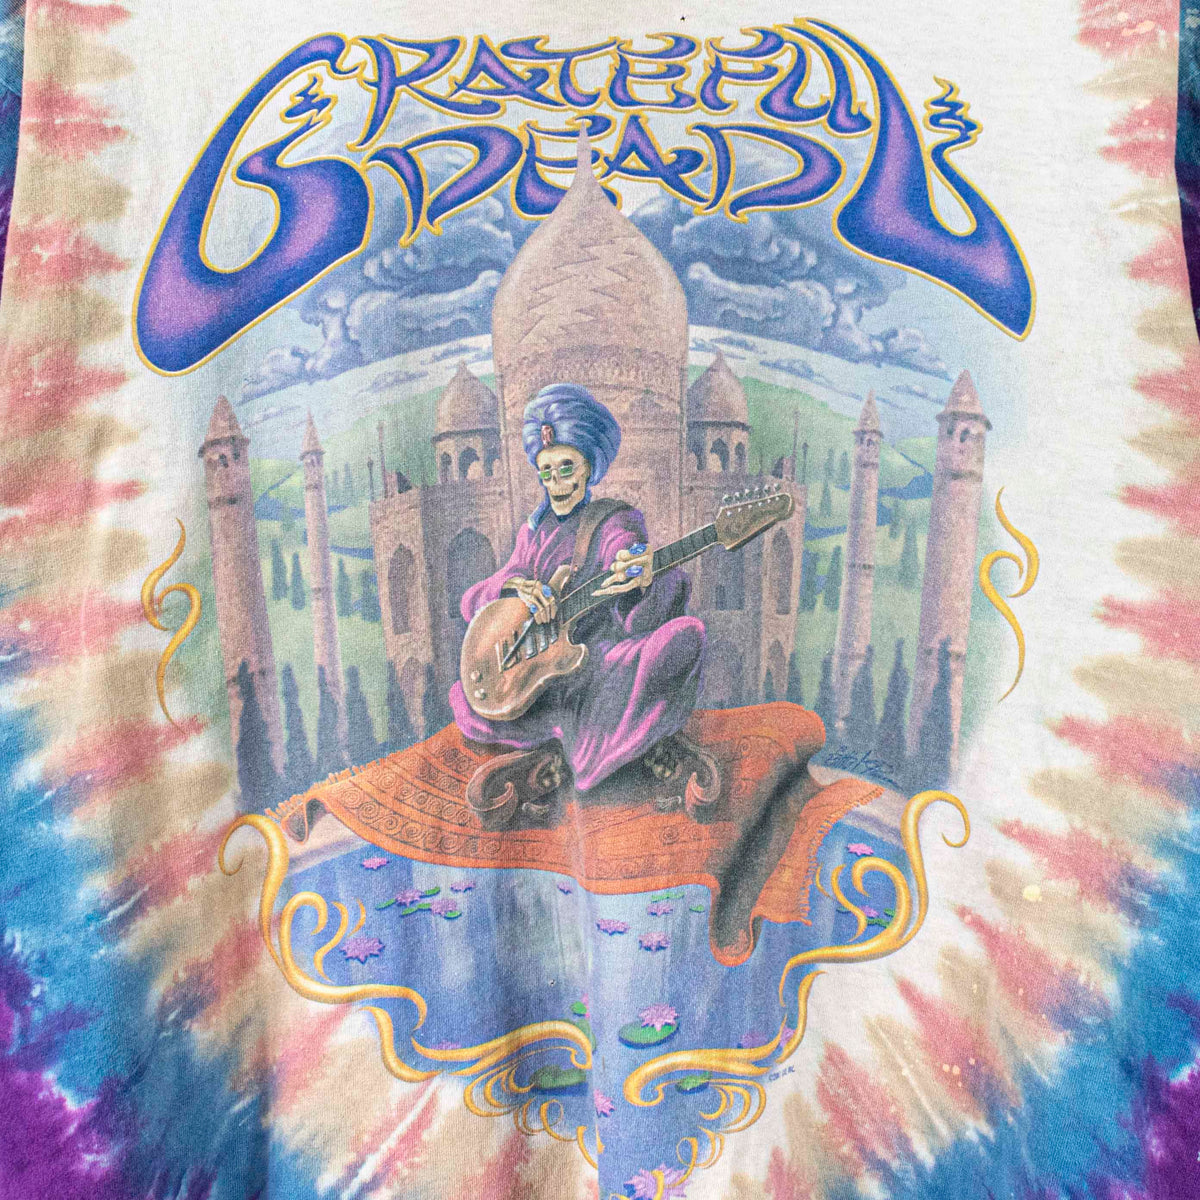 Grateful Dead Carpet Ride Tie-Dye T-Shirt Tee Liquid Blue